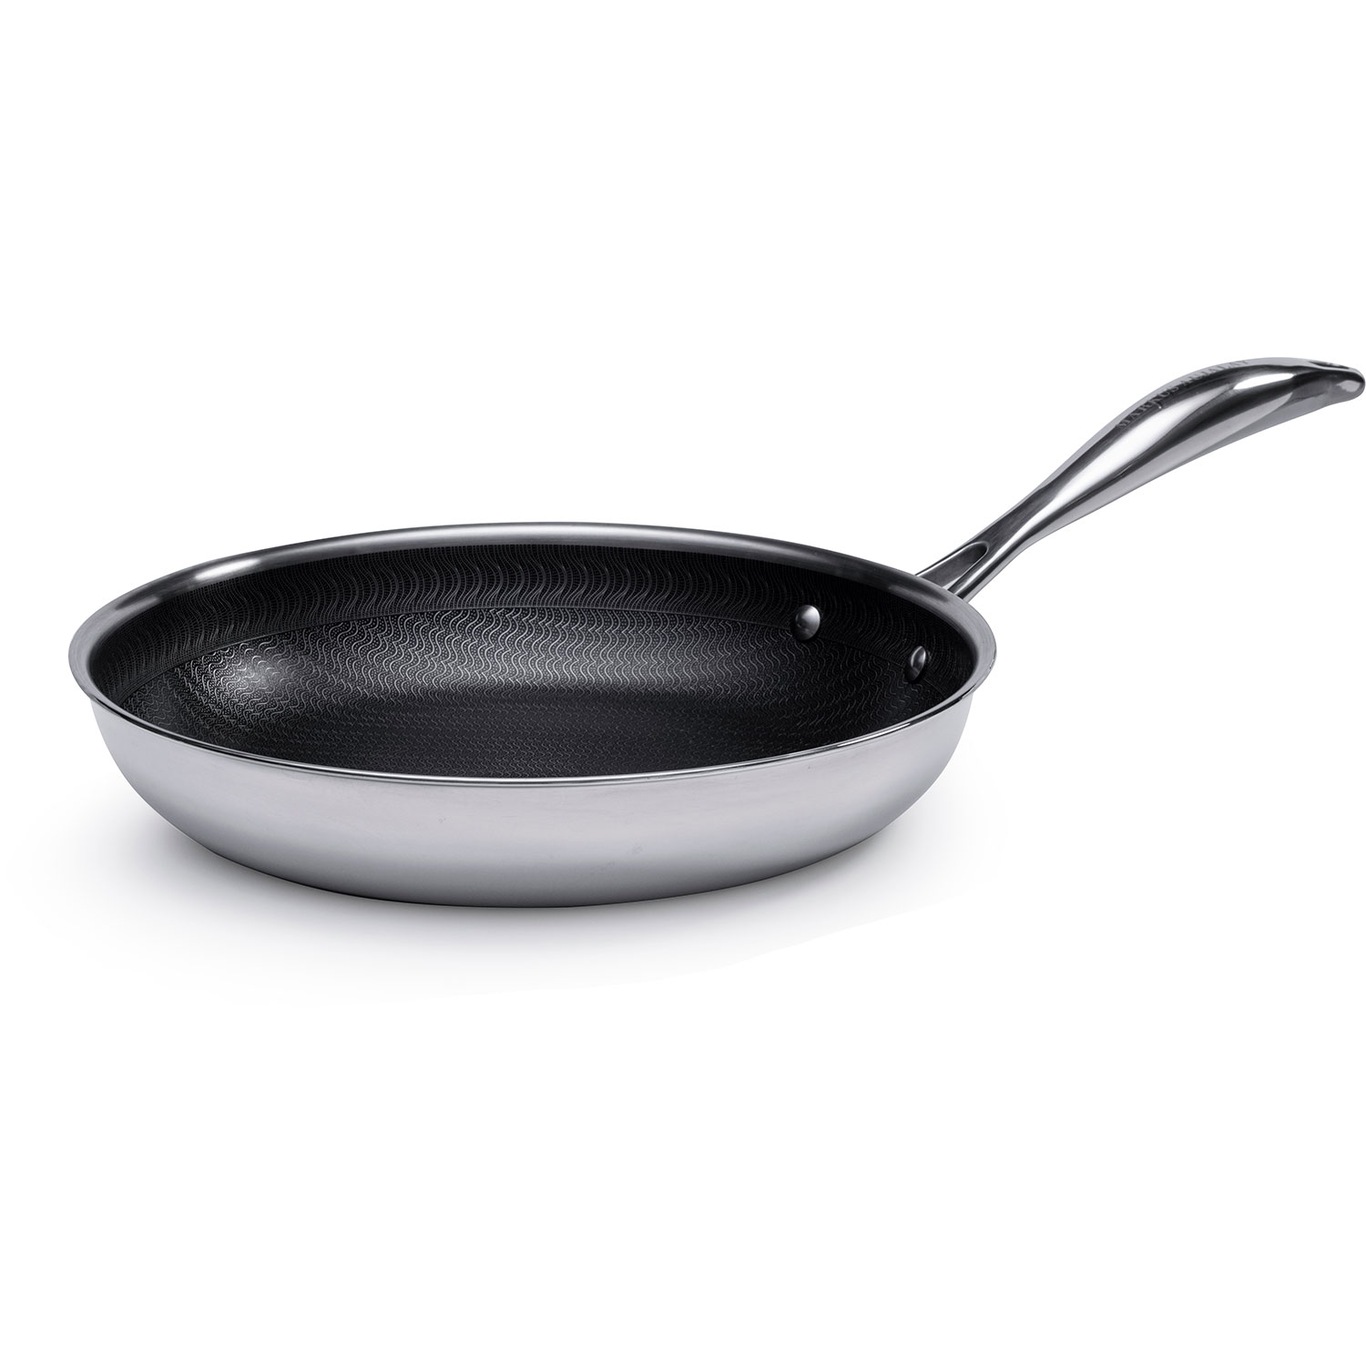 Markus Steelsafe Frying Pan, 28 cm